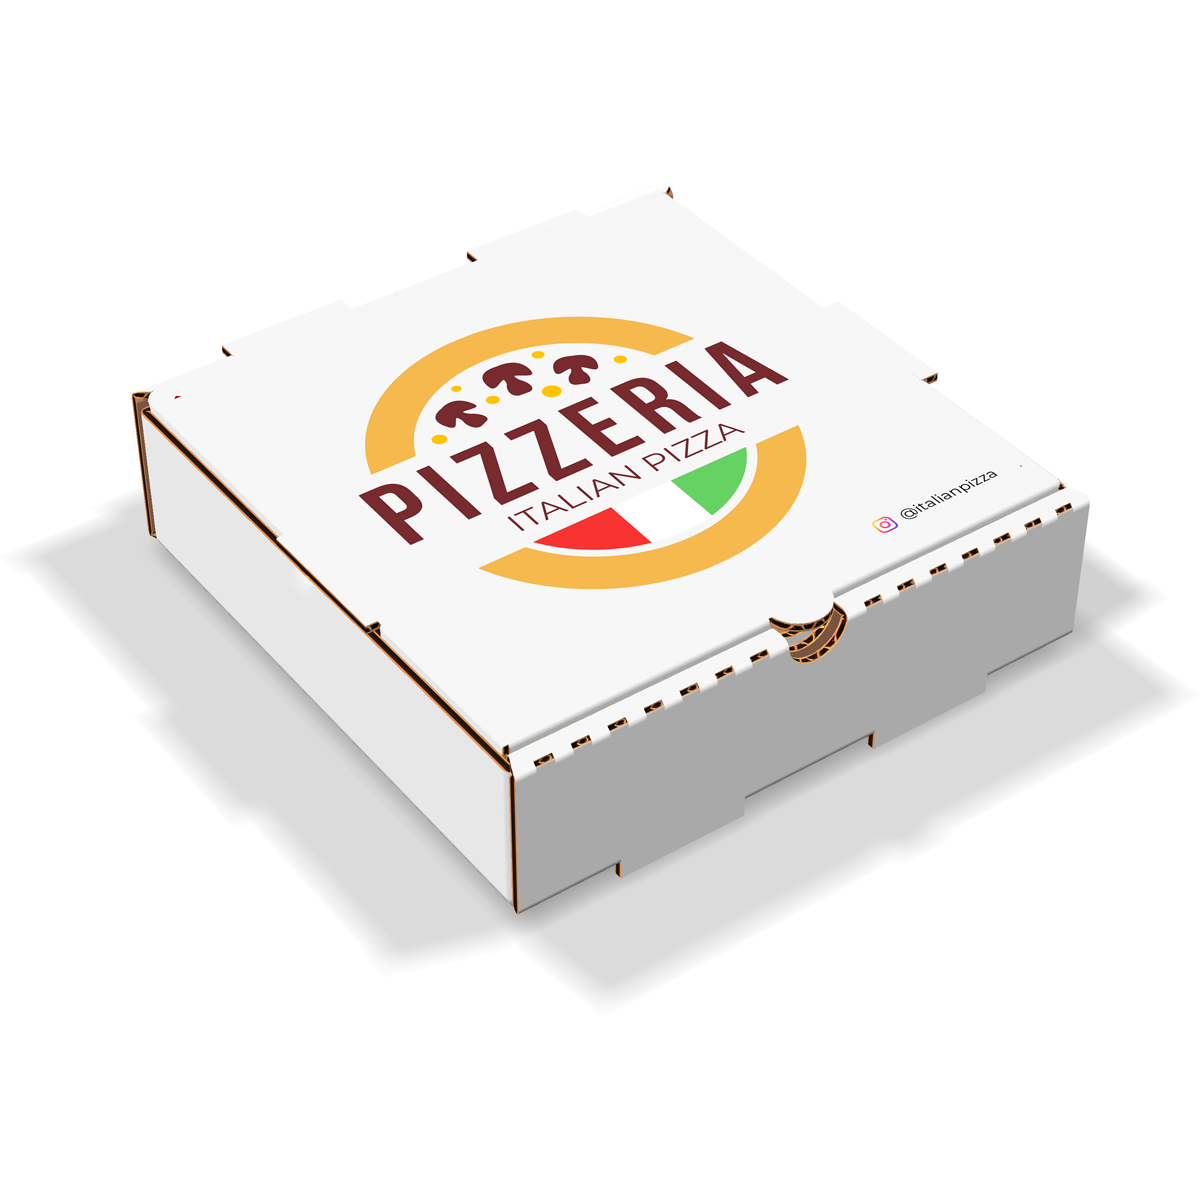  Pizza Boxes